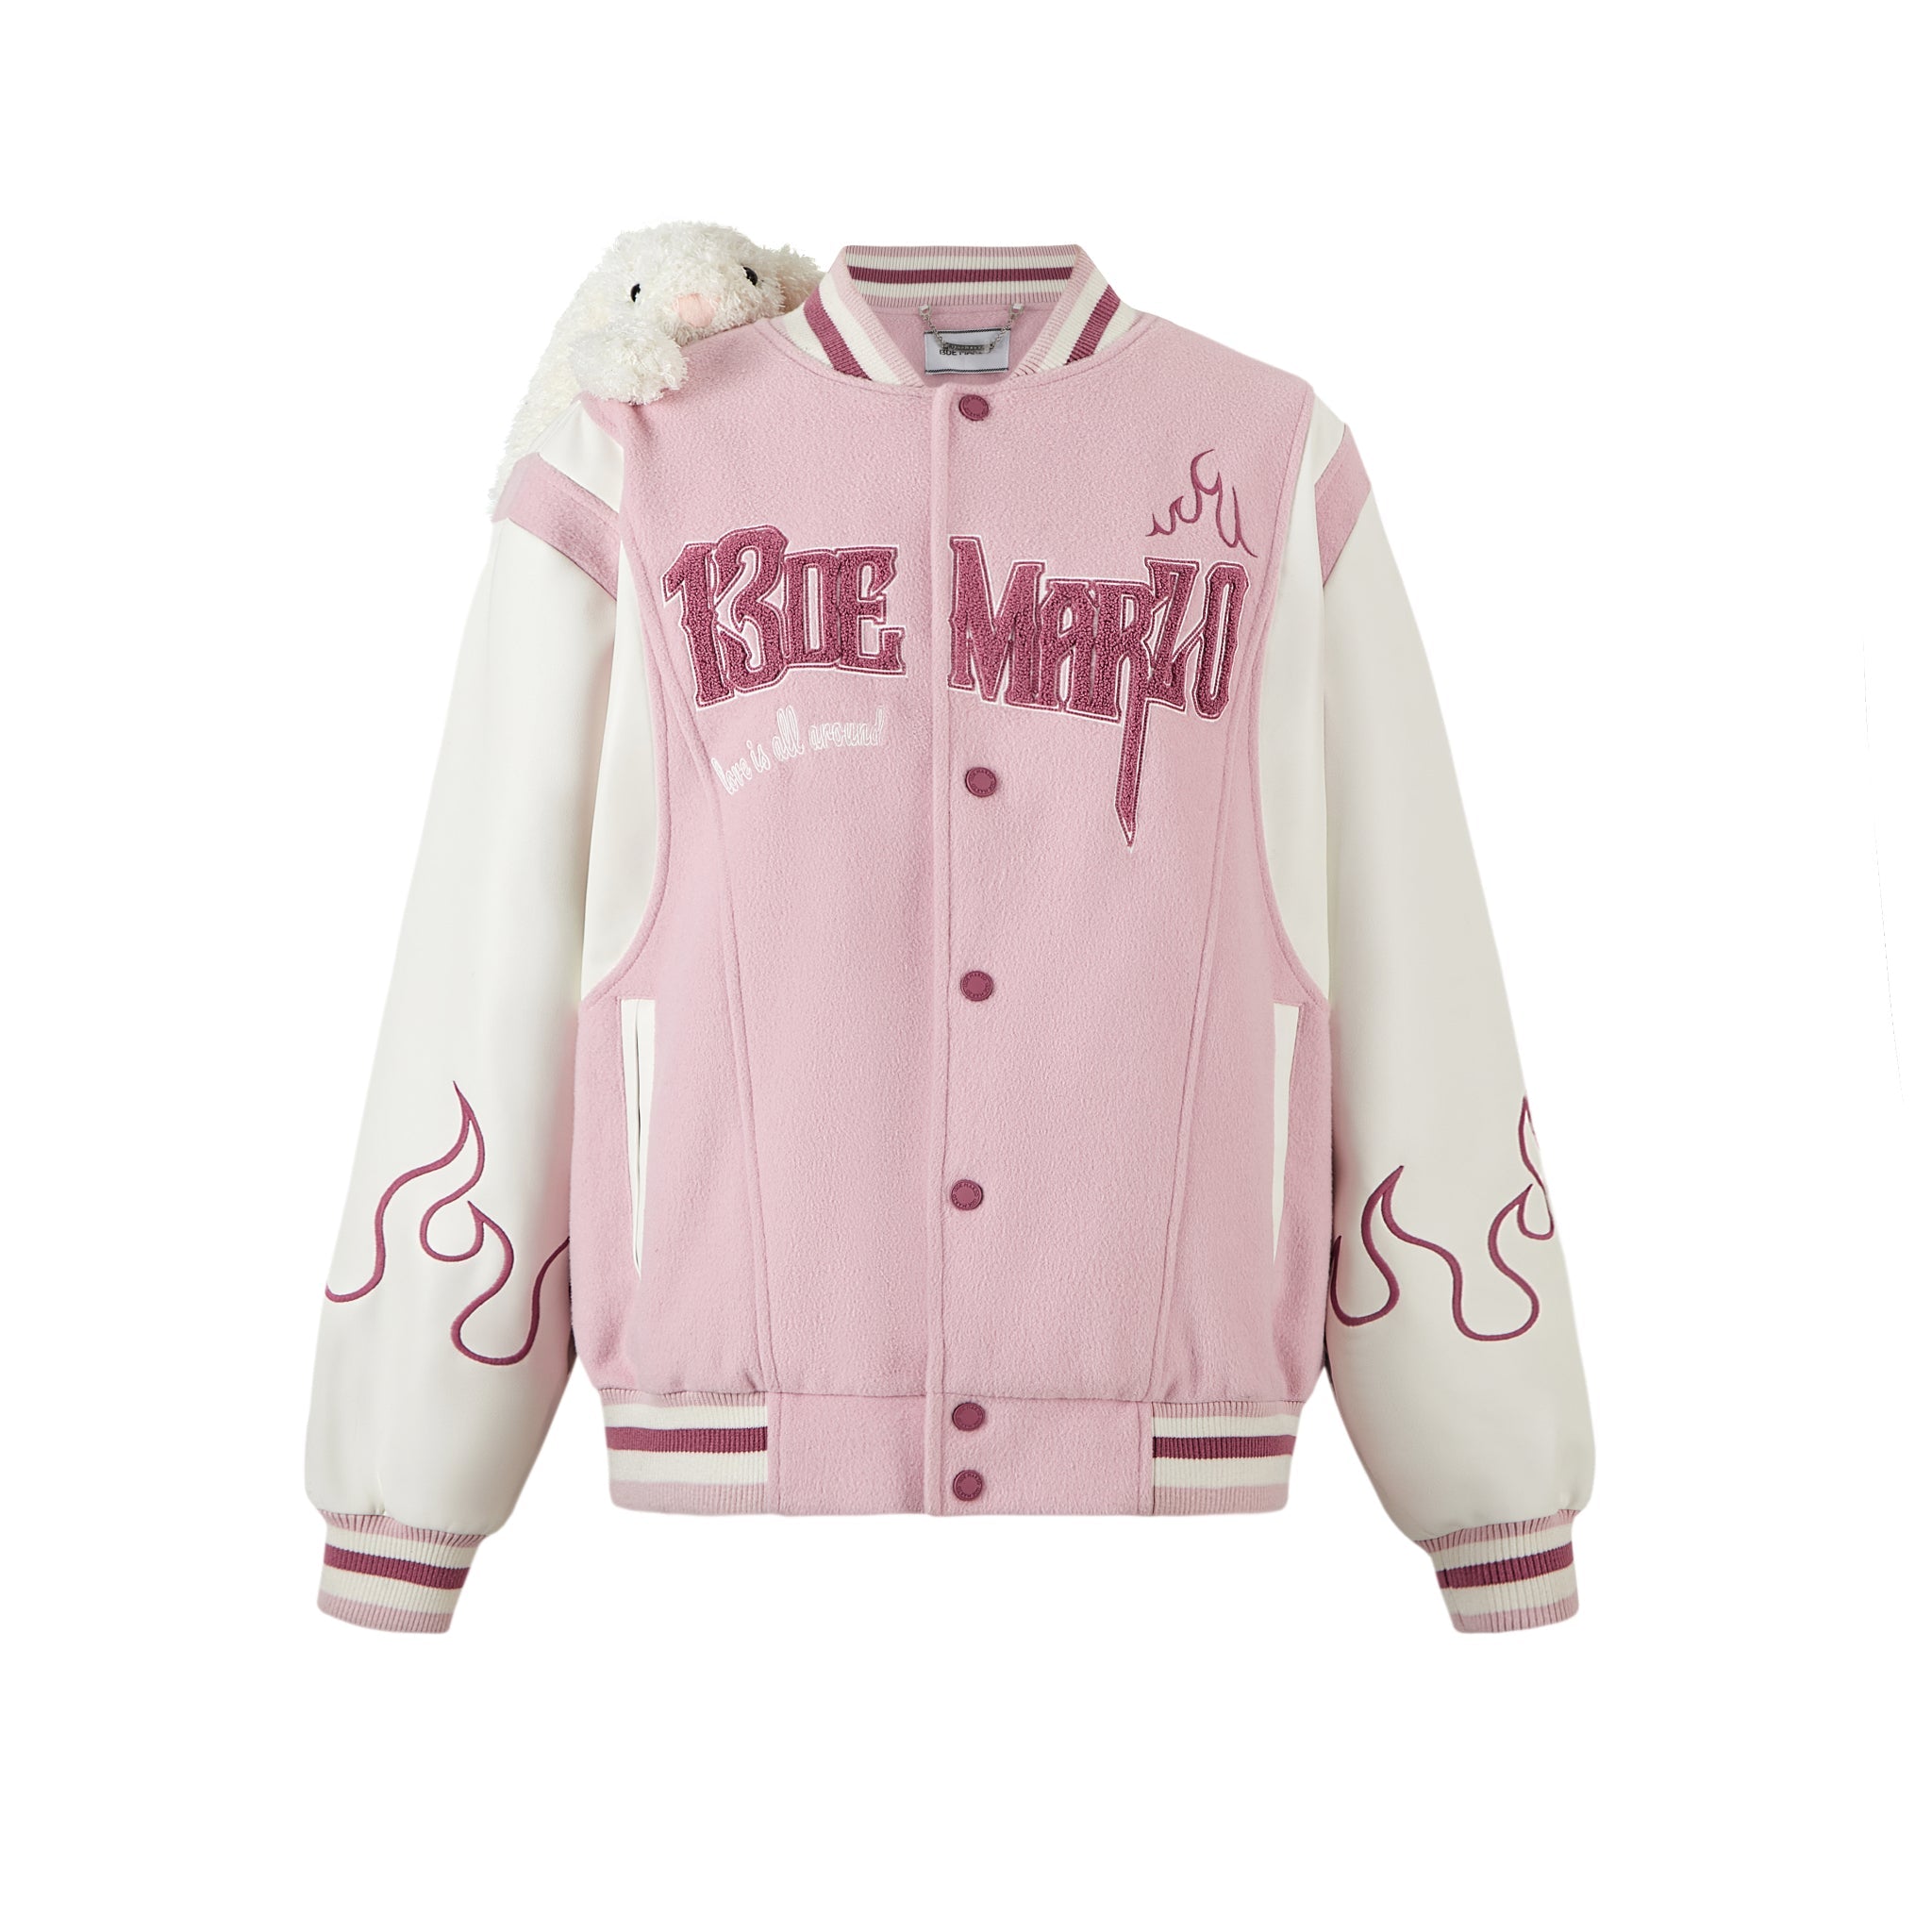 13DE Marzo Pink Flame Baseball Jacket Coat